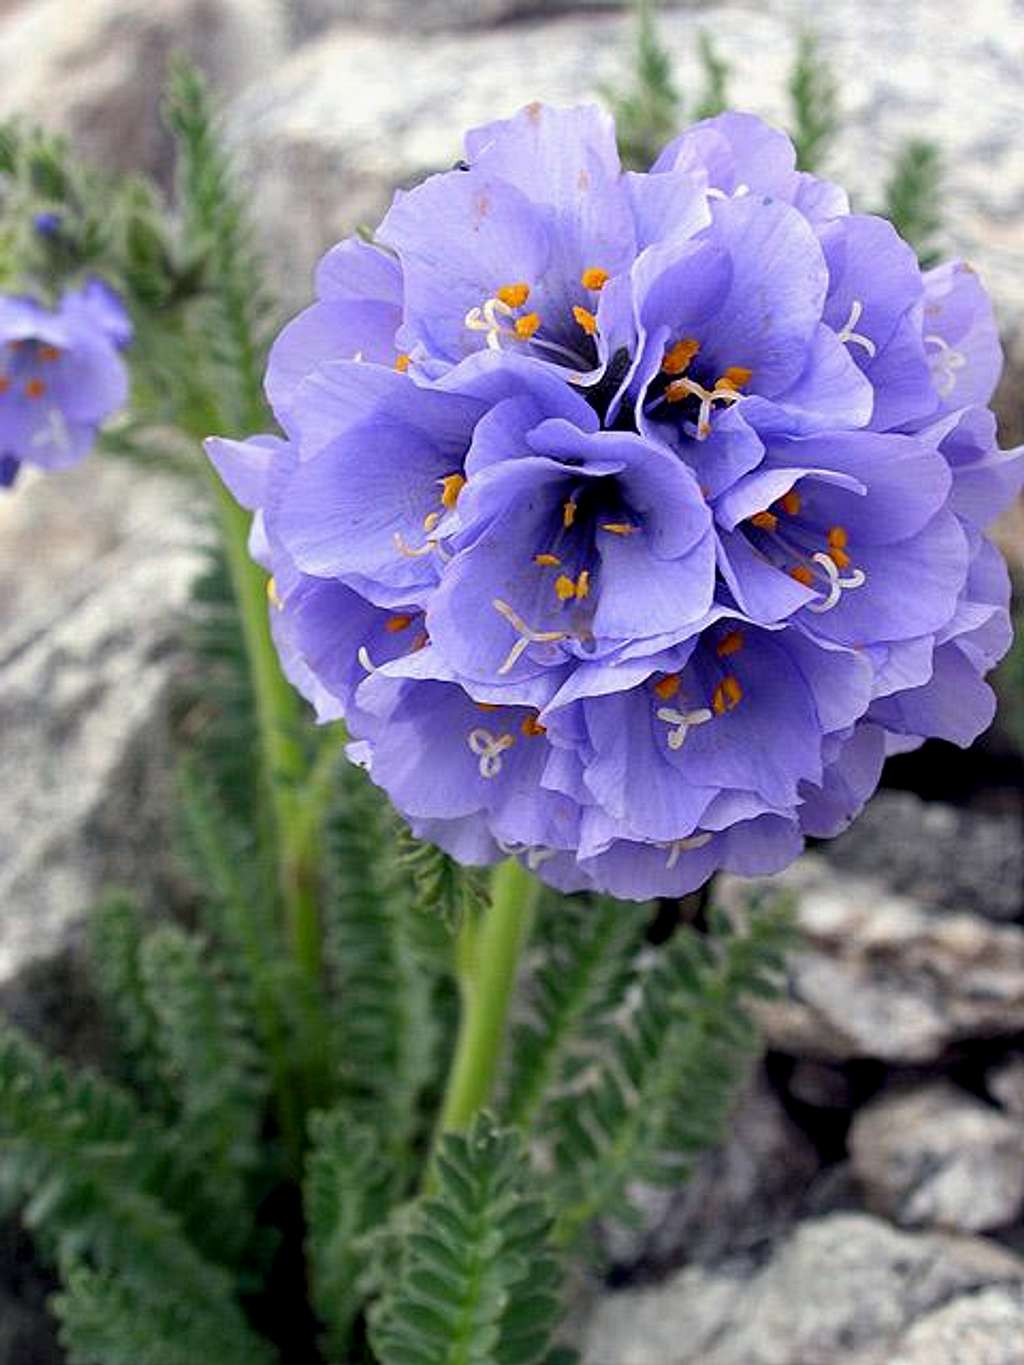 Stupendous alpine wildflower...